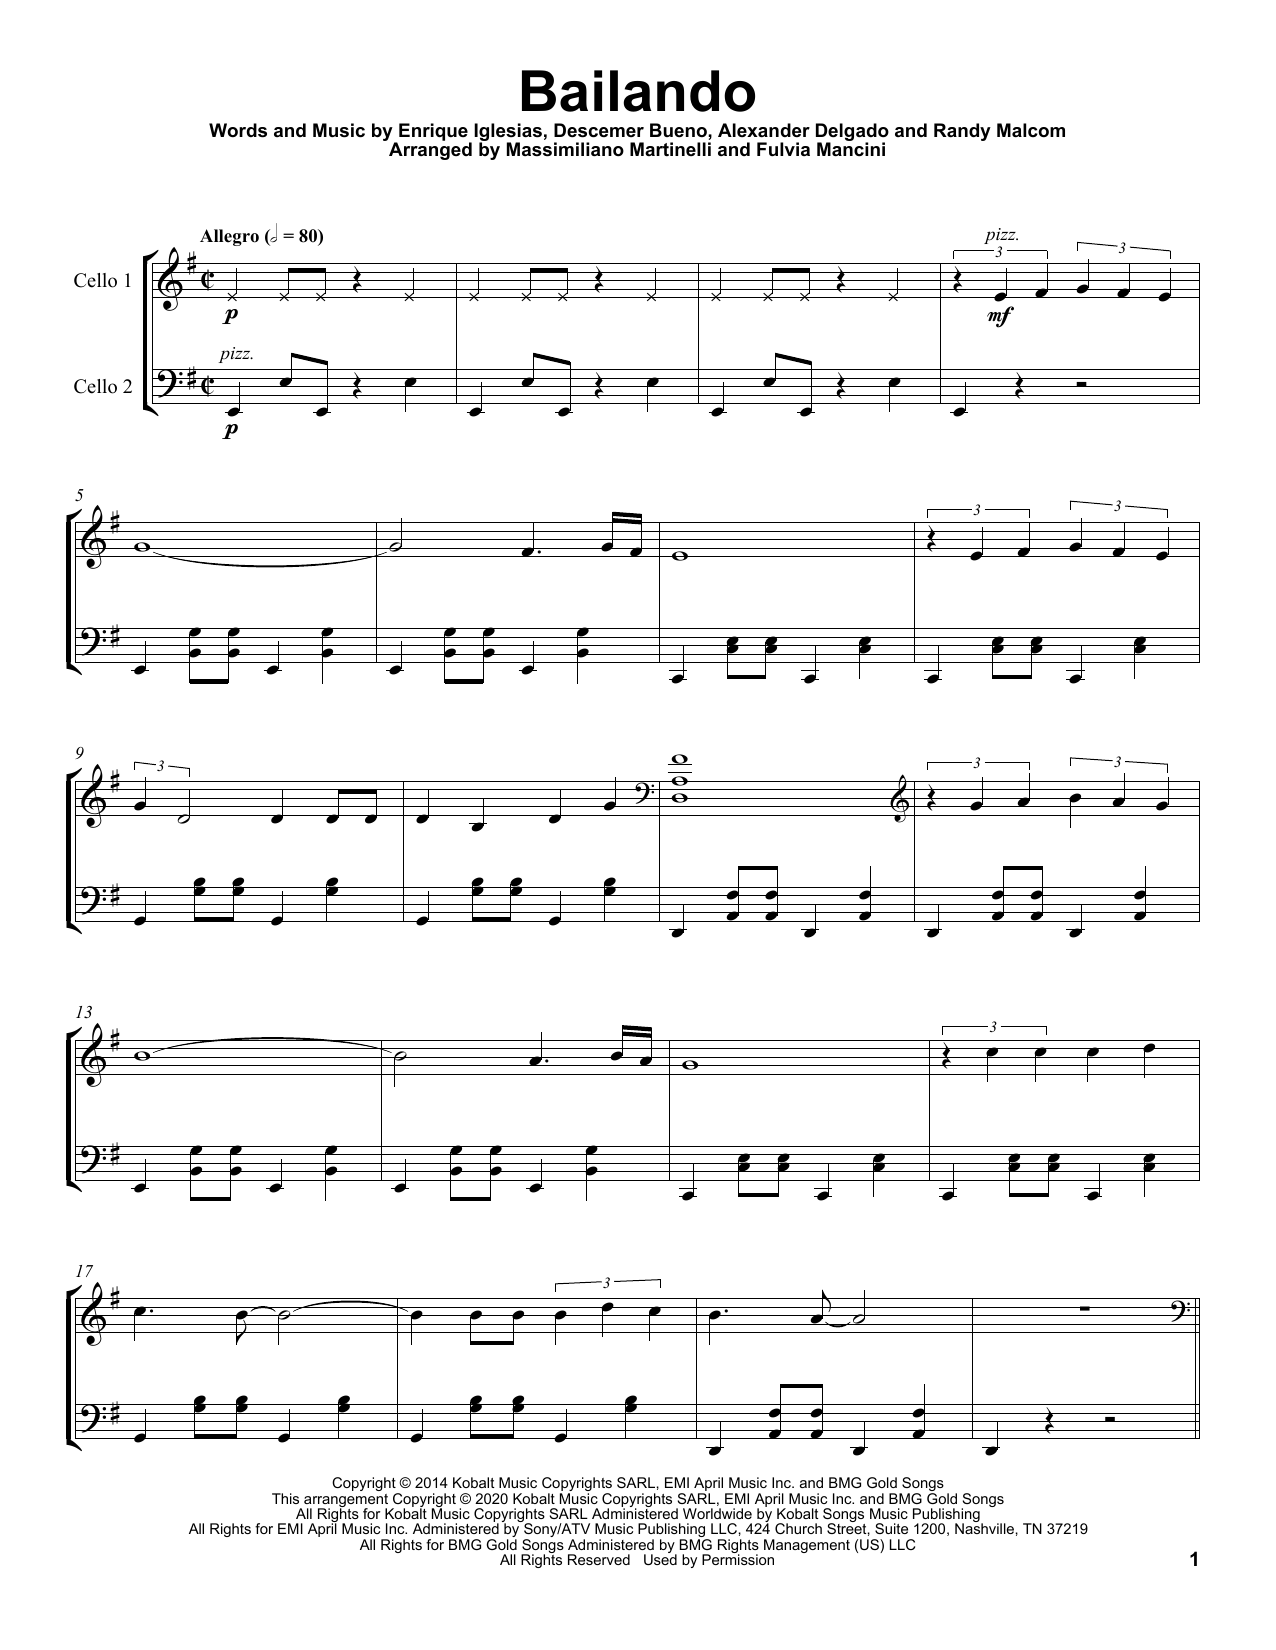 Mr. & Mrs. Cello Bailando Sheet Music Notes & Chords for Cello Duet - Download or Print PDF